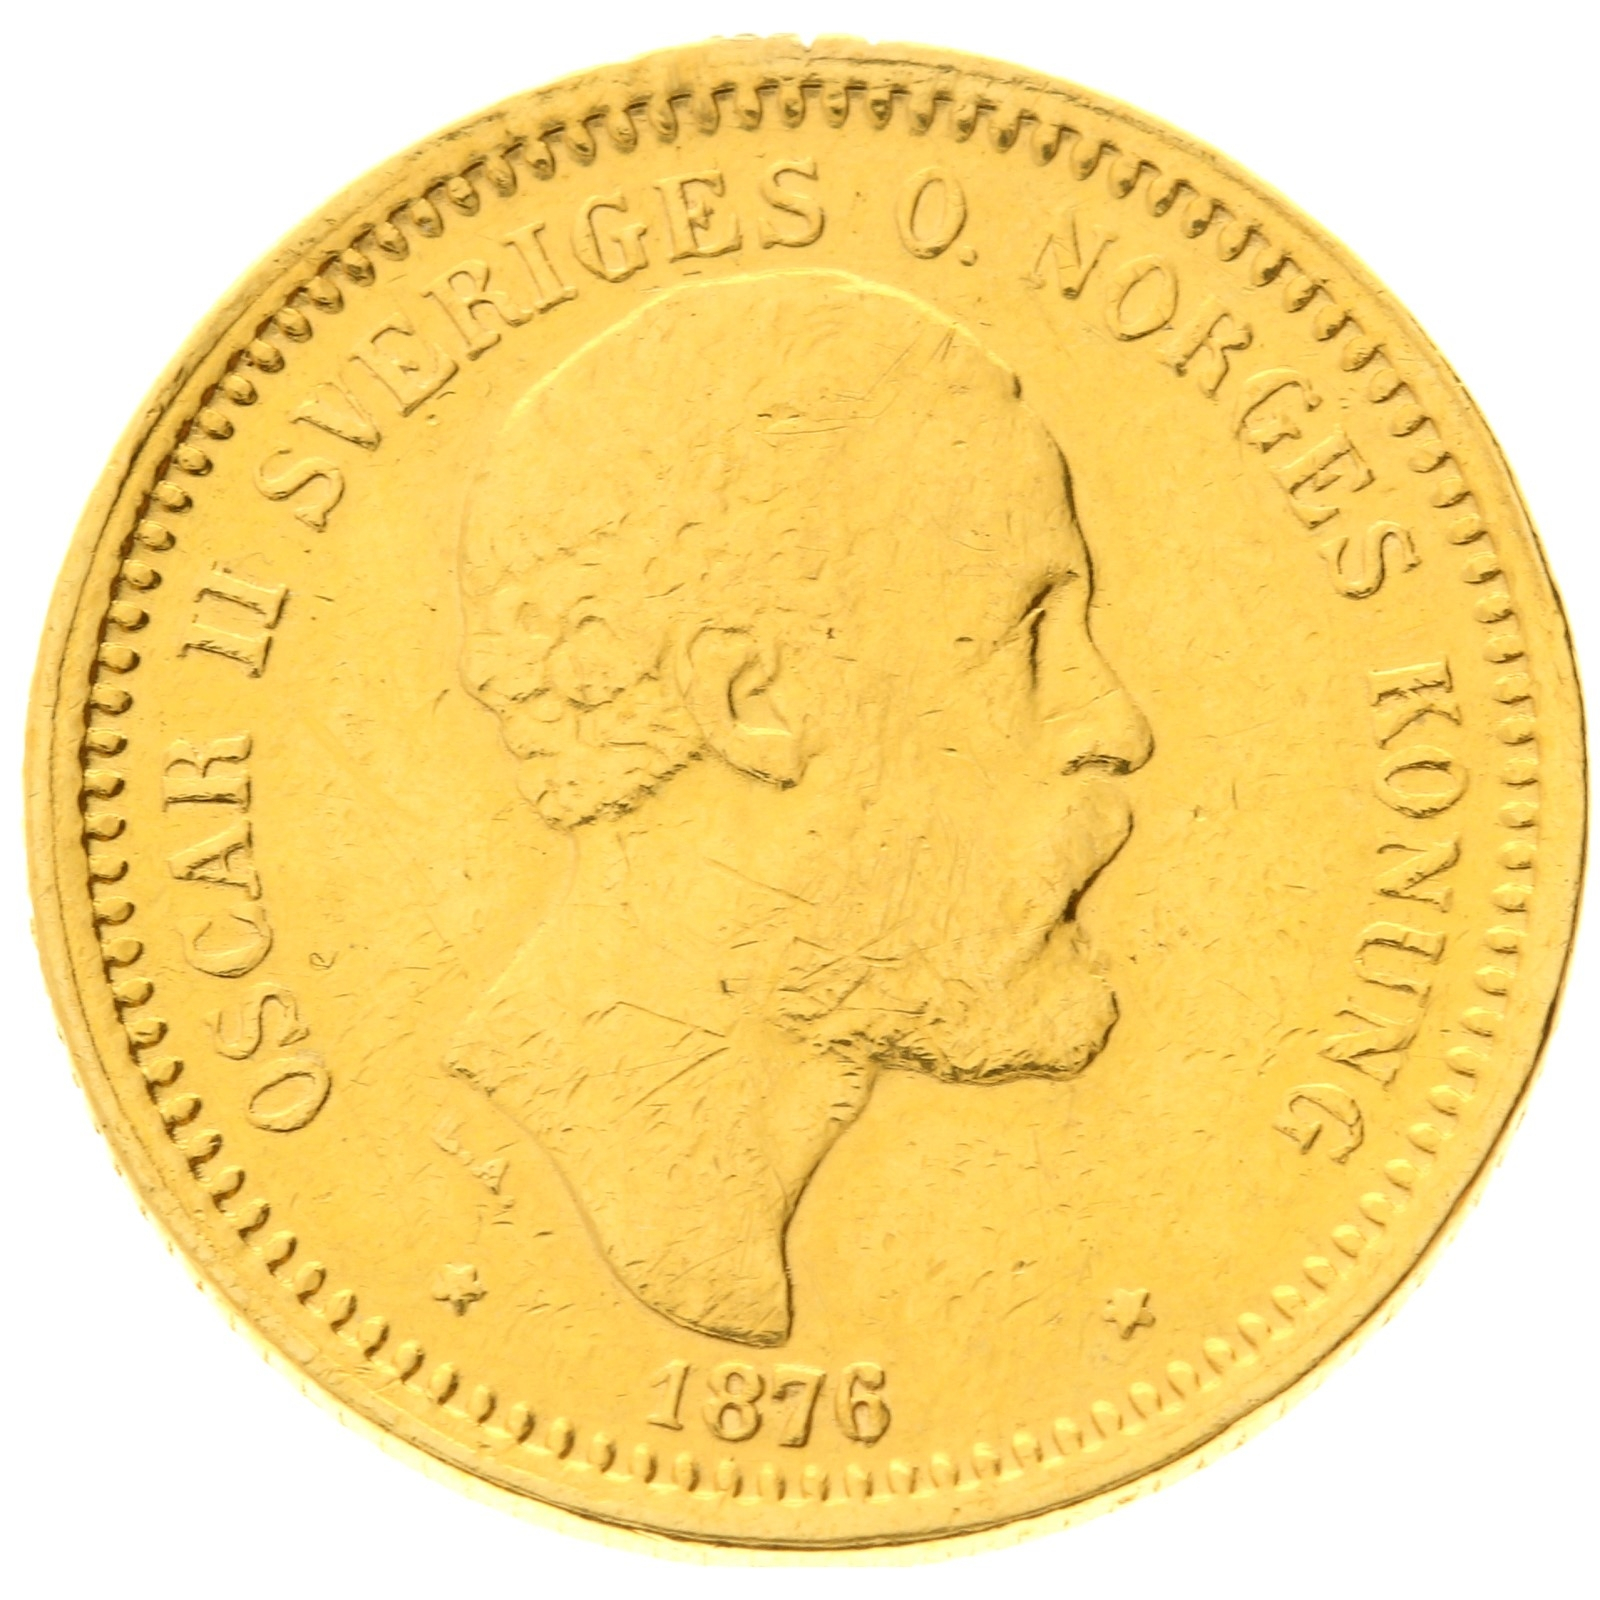 Sweden - 10 kronor - 1876 - Oscar II